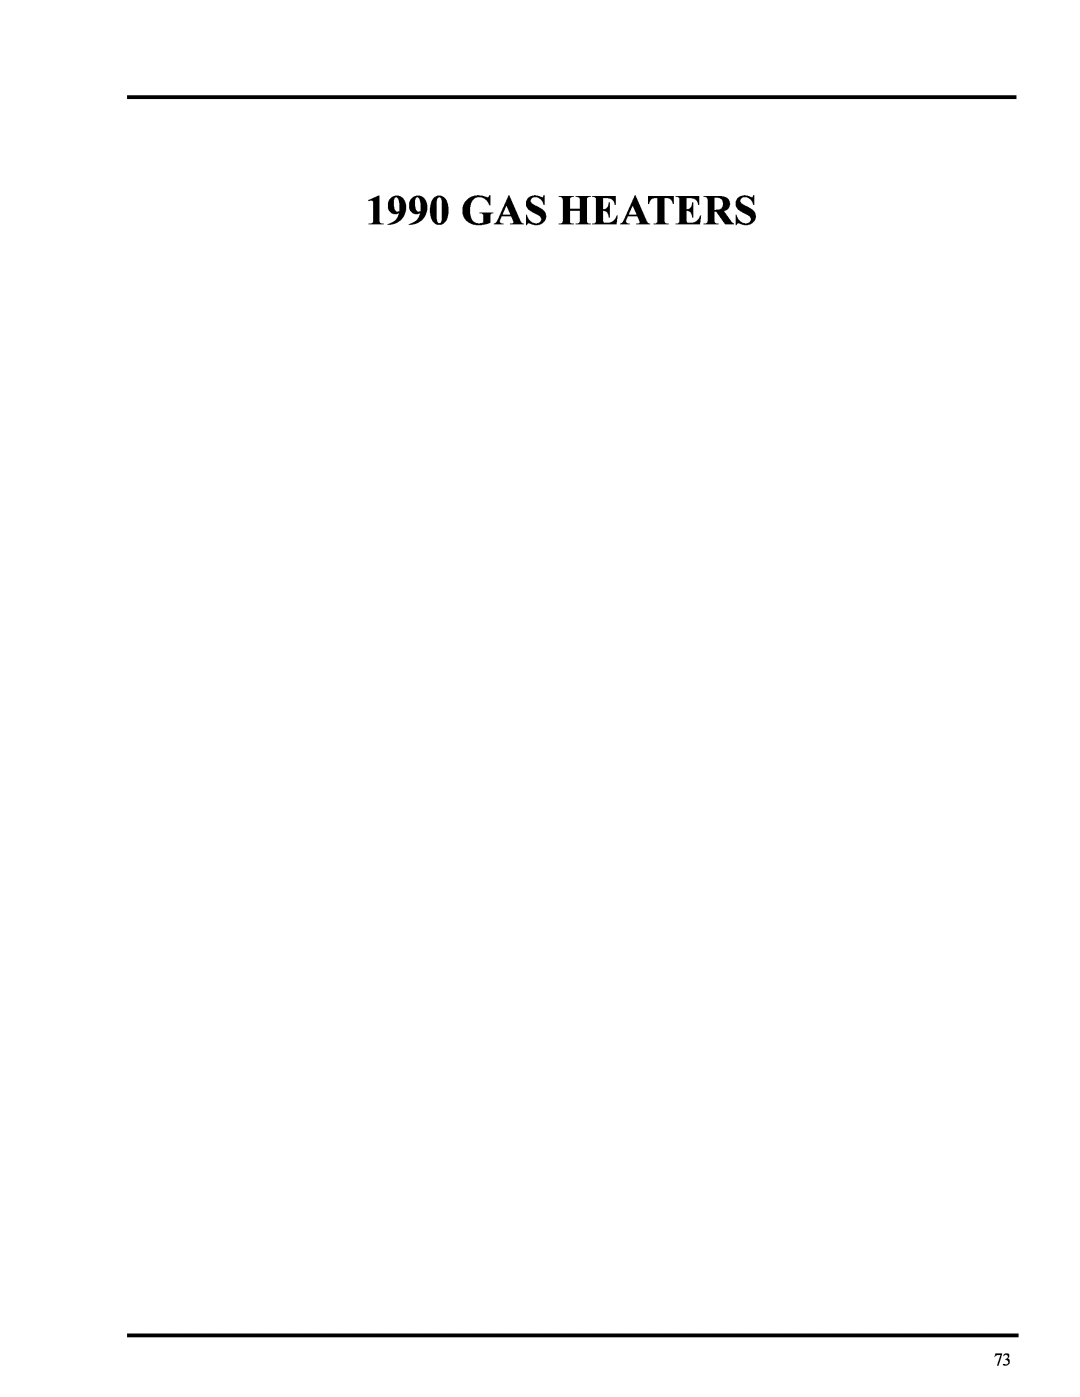 GSI Outdoors PNEG-377 service manual Gas Heaters 